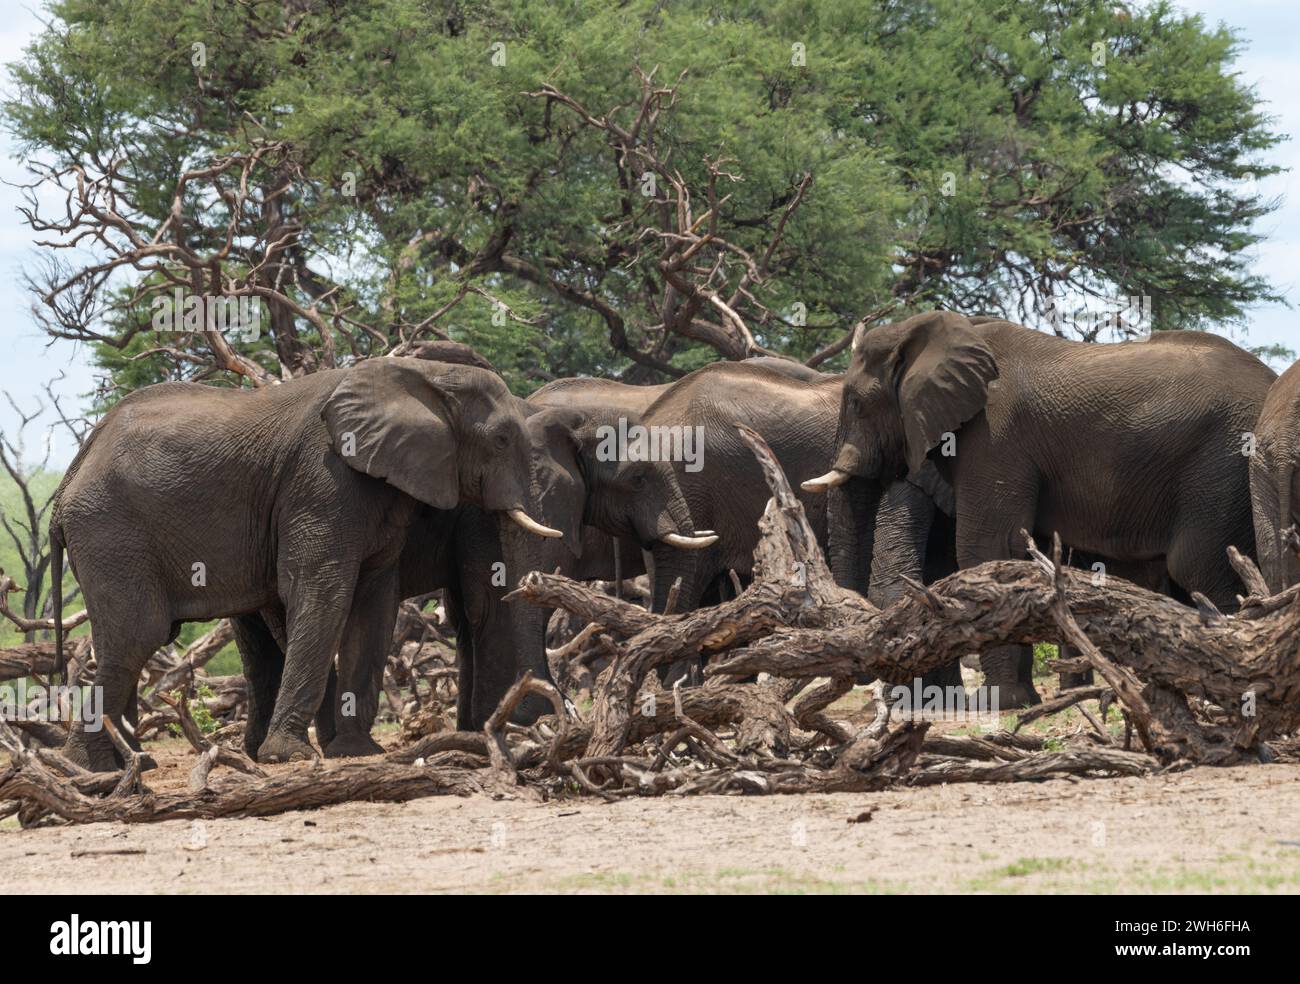 Elephants in Bwabwata National Park, Caprivi, Namibia Stock Photo